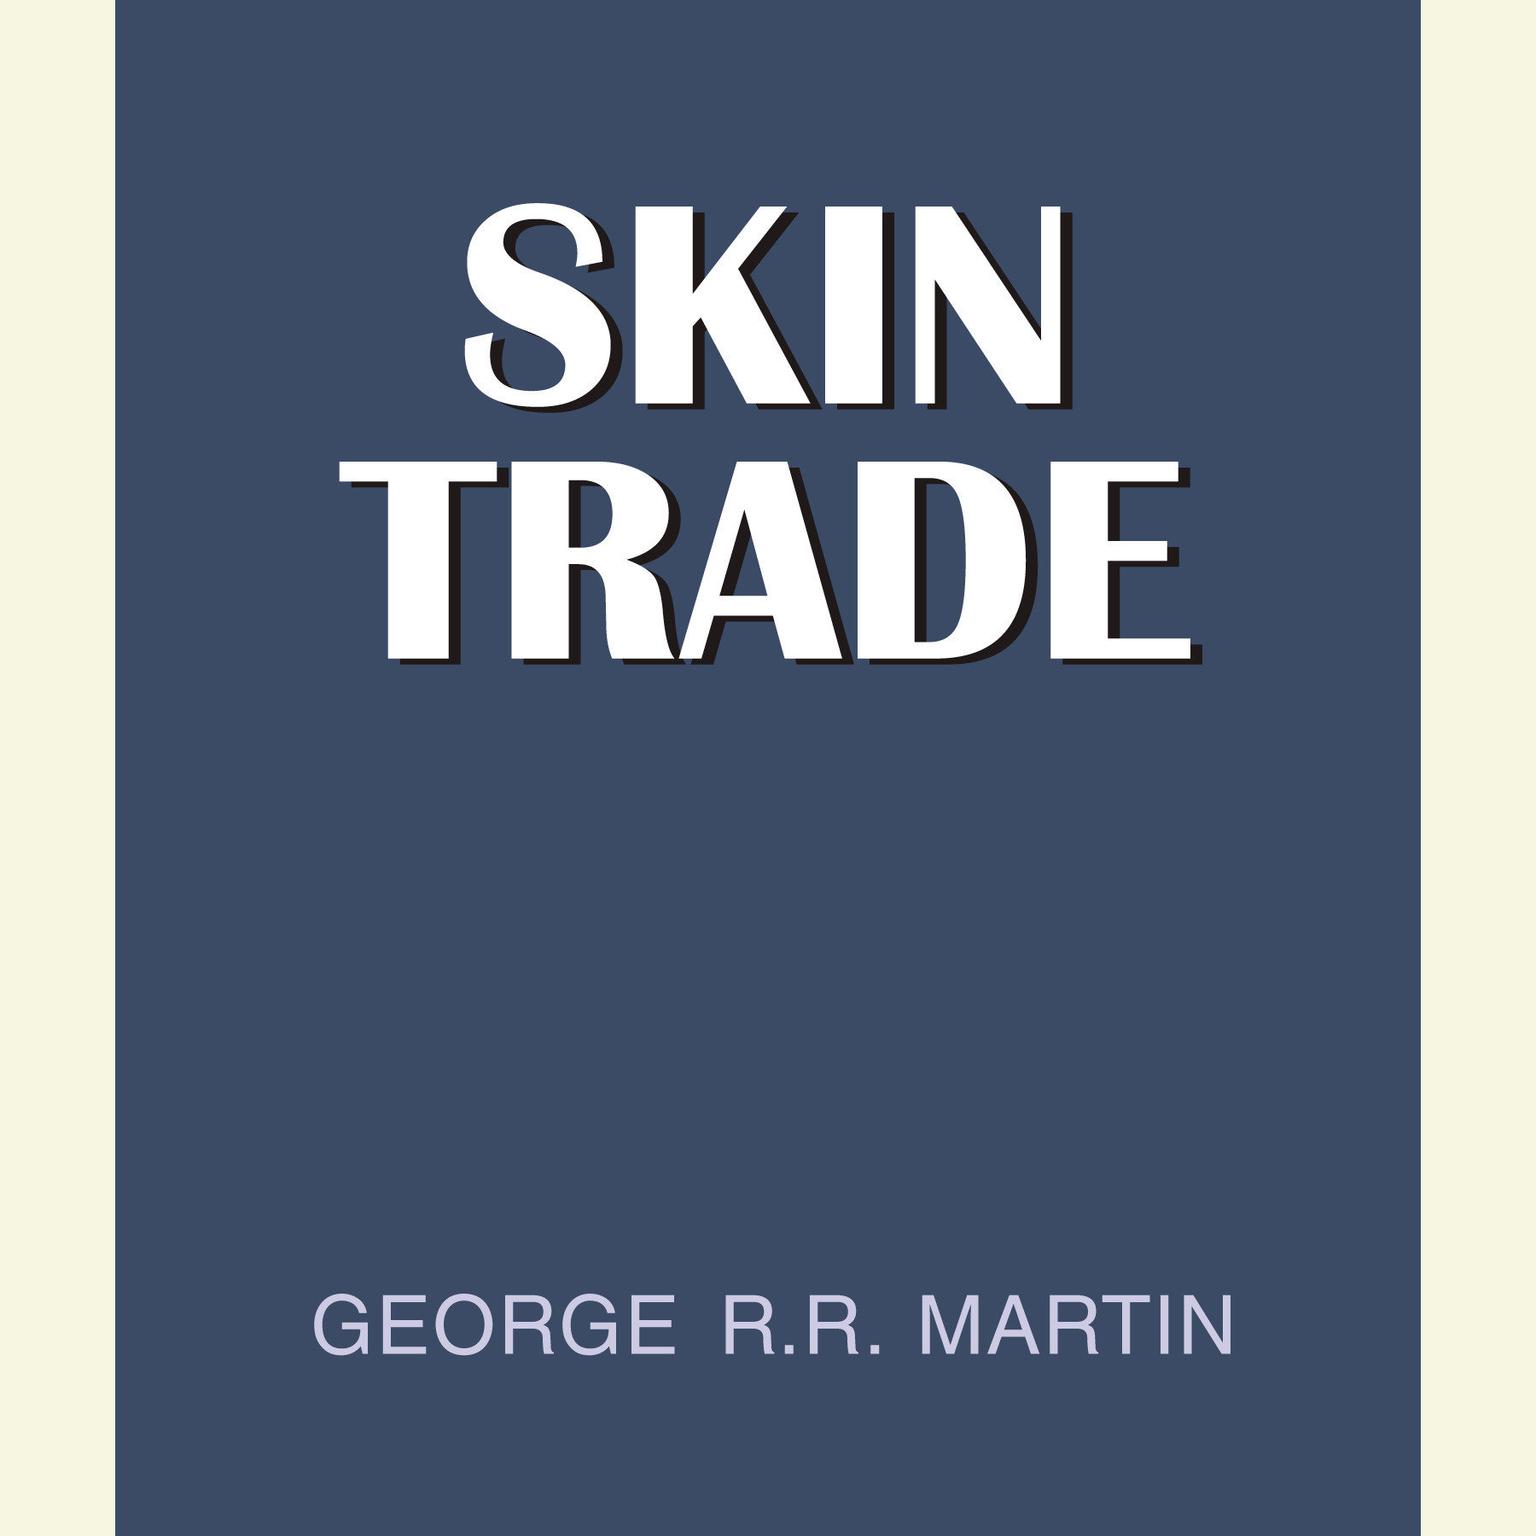 Skin Trade (Abridged) Audiobook, by George R. R. Martin